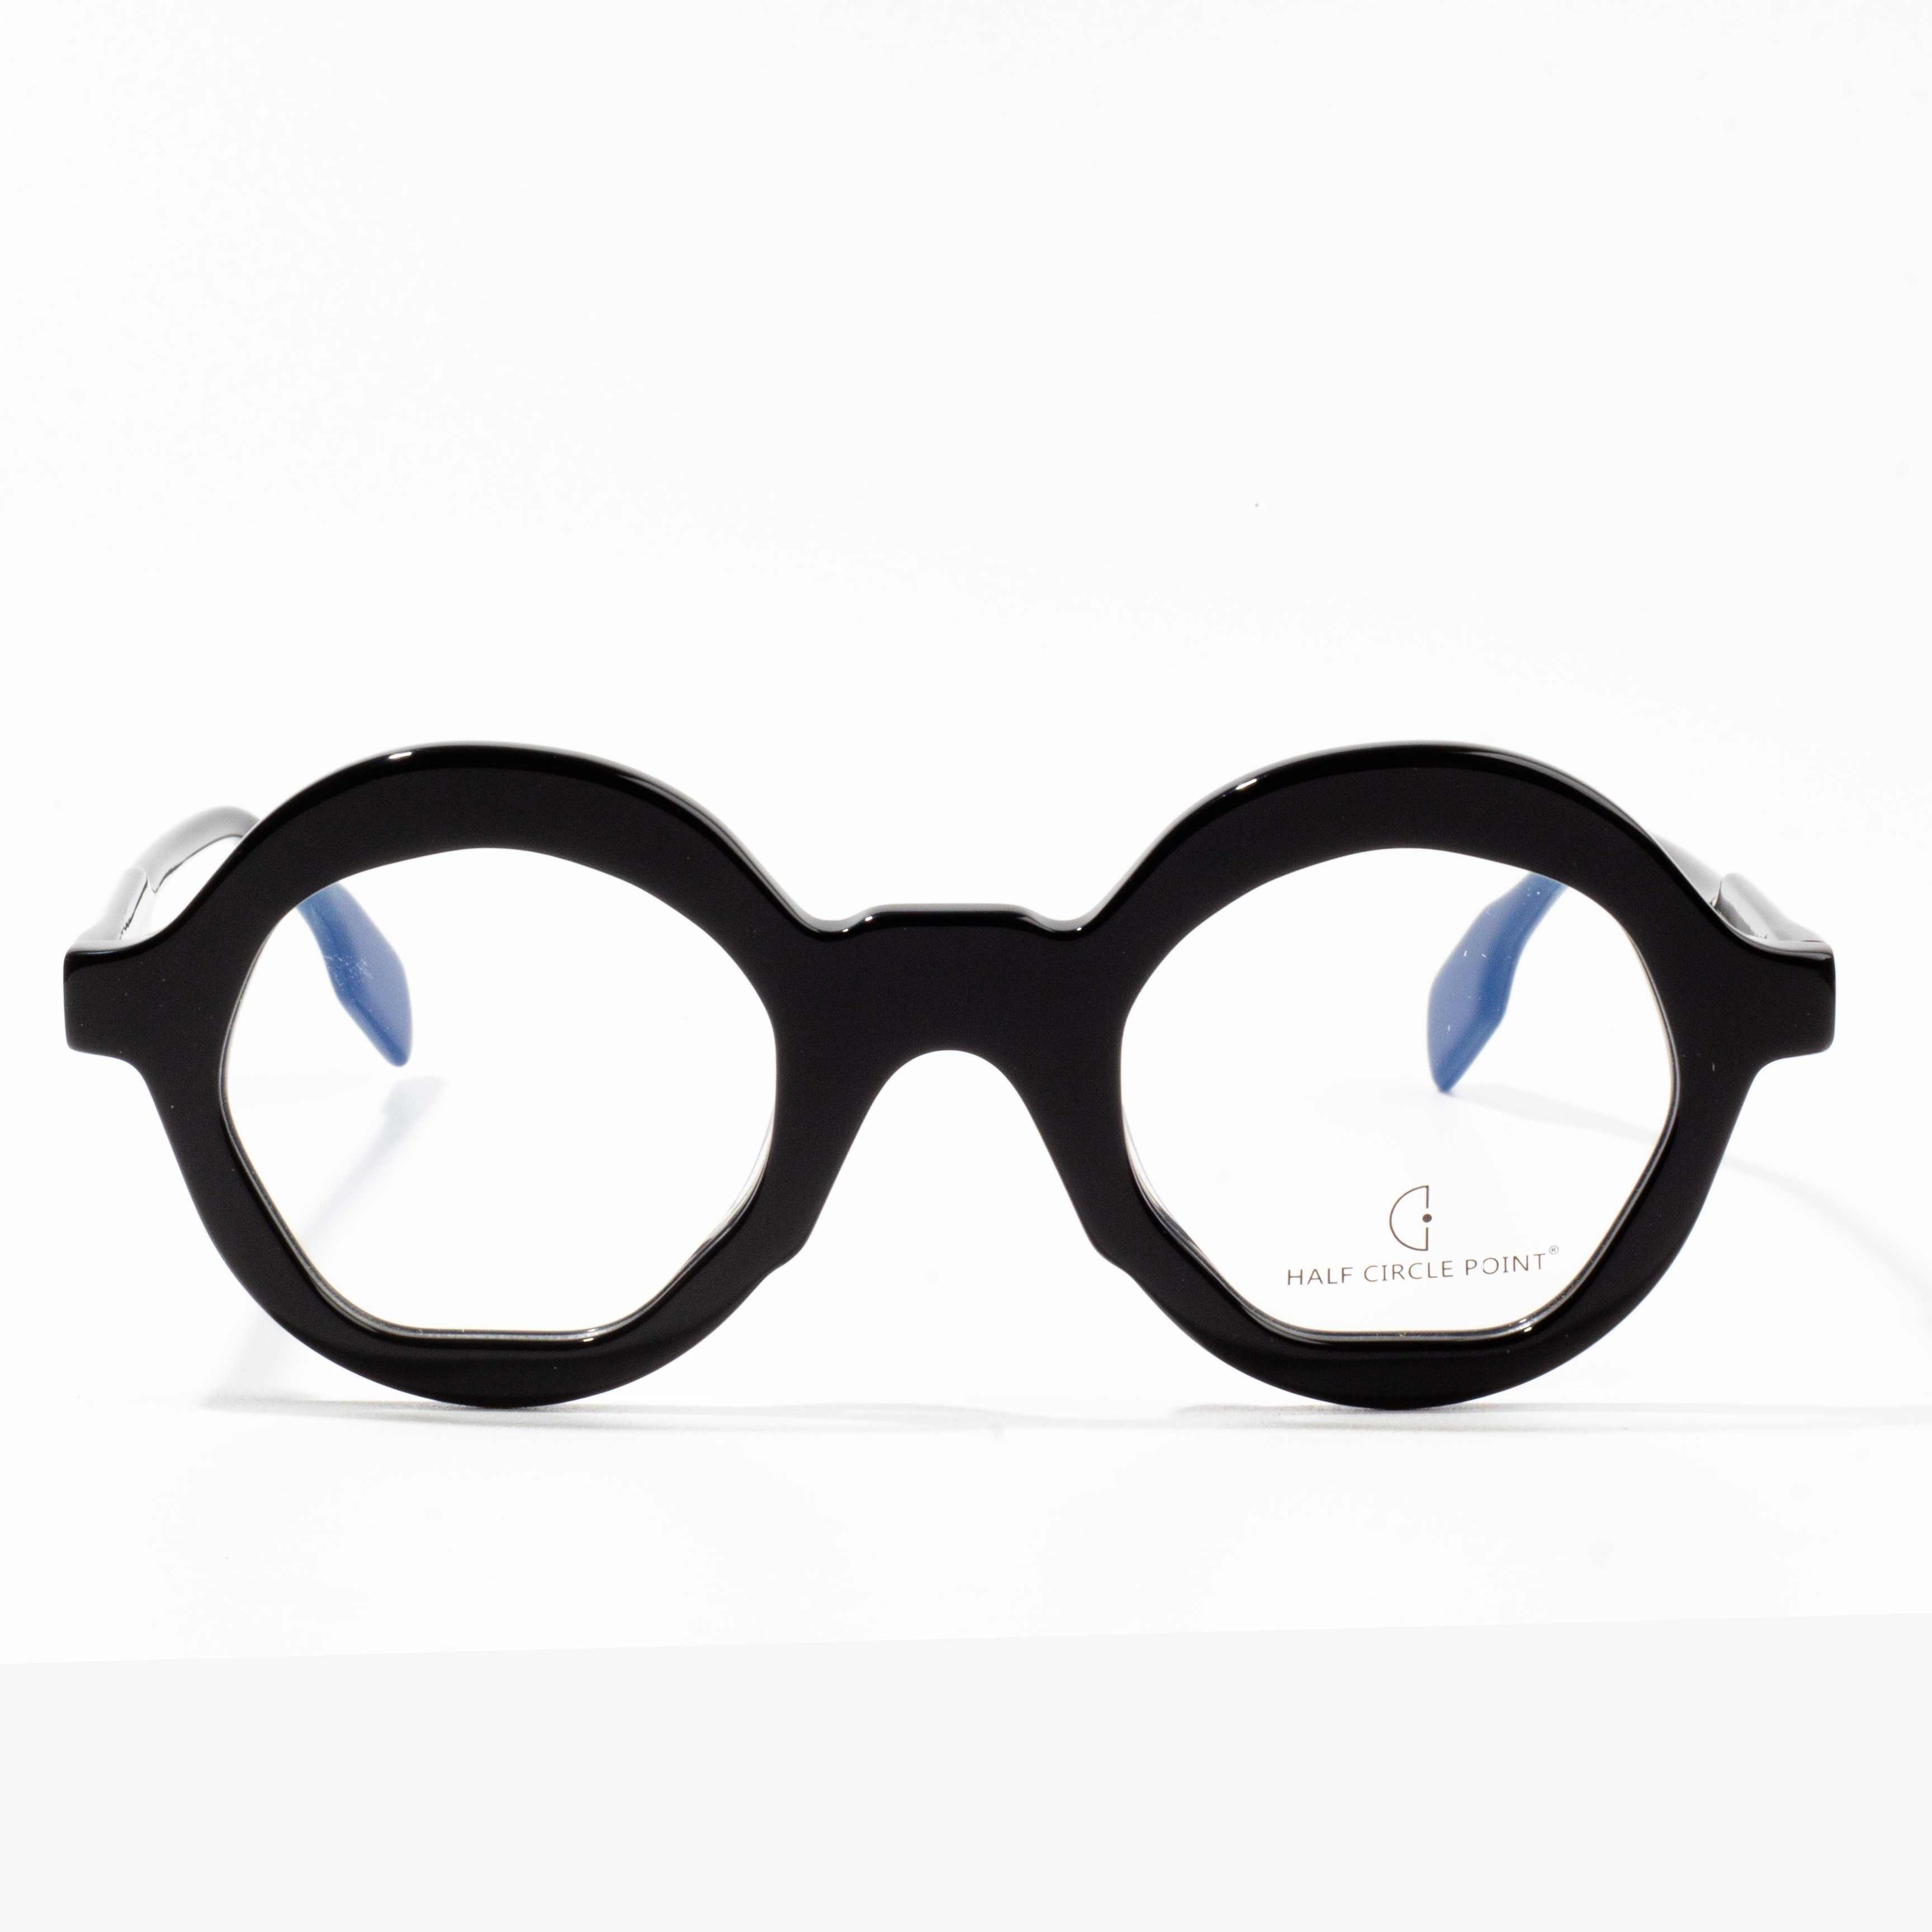 acetate eyeglass frames